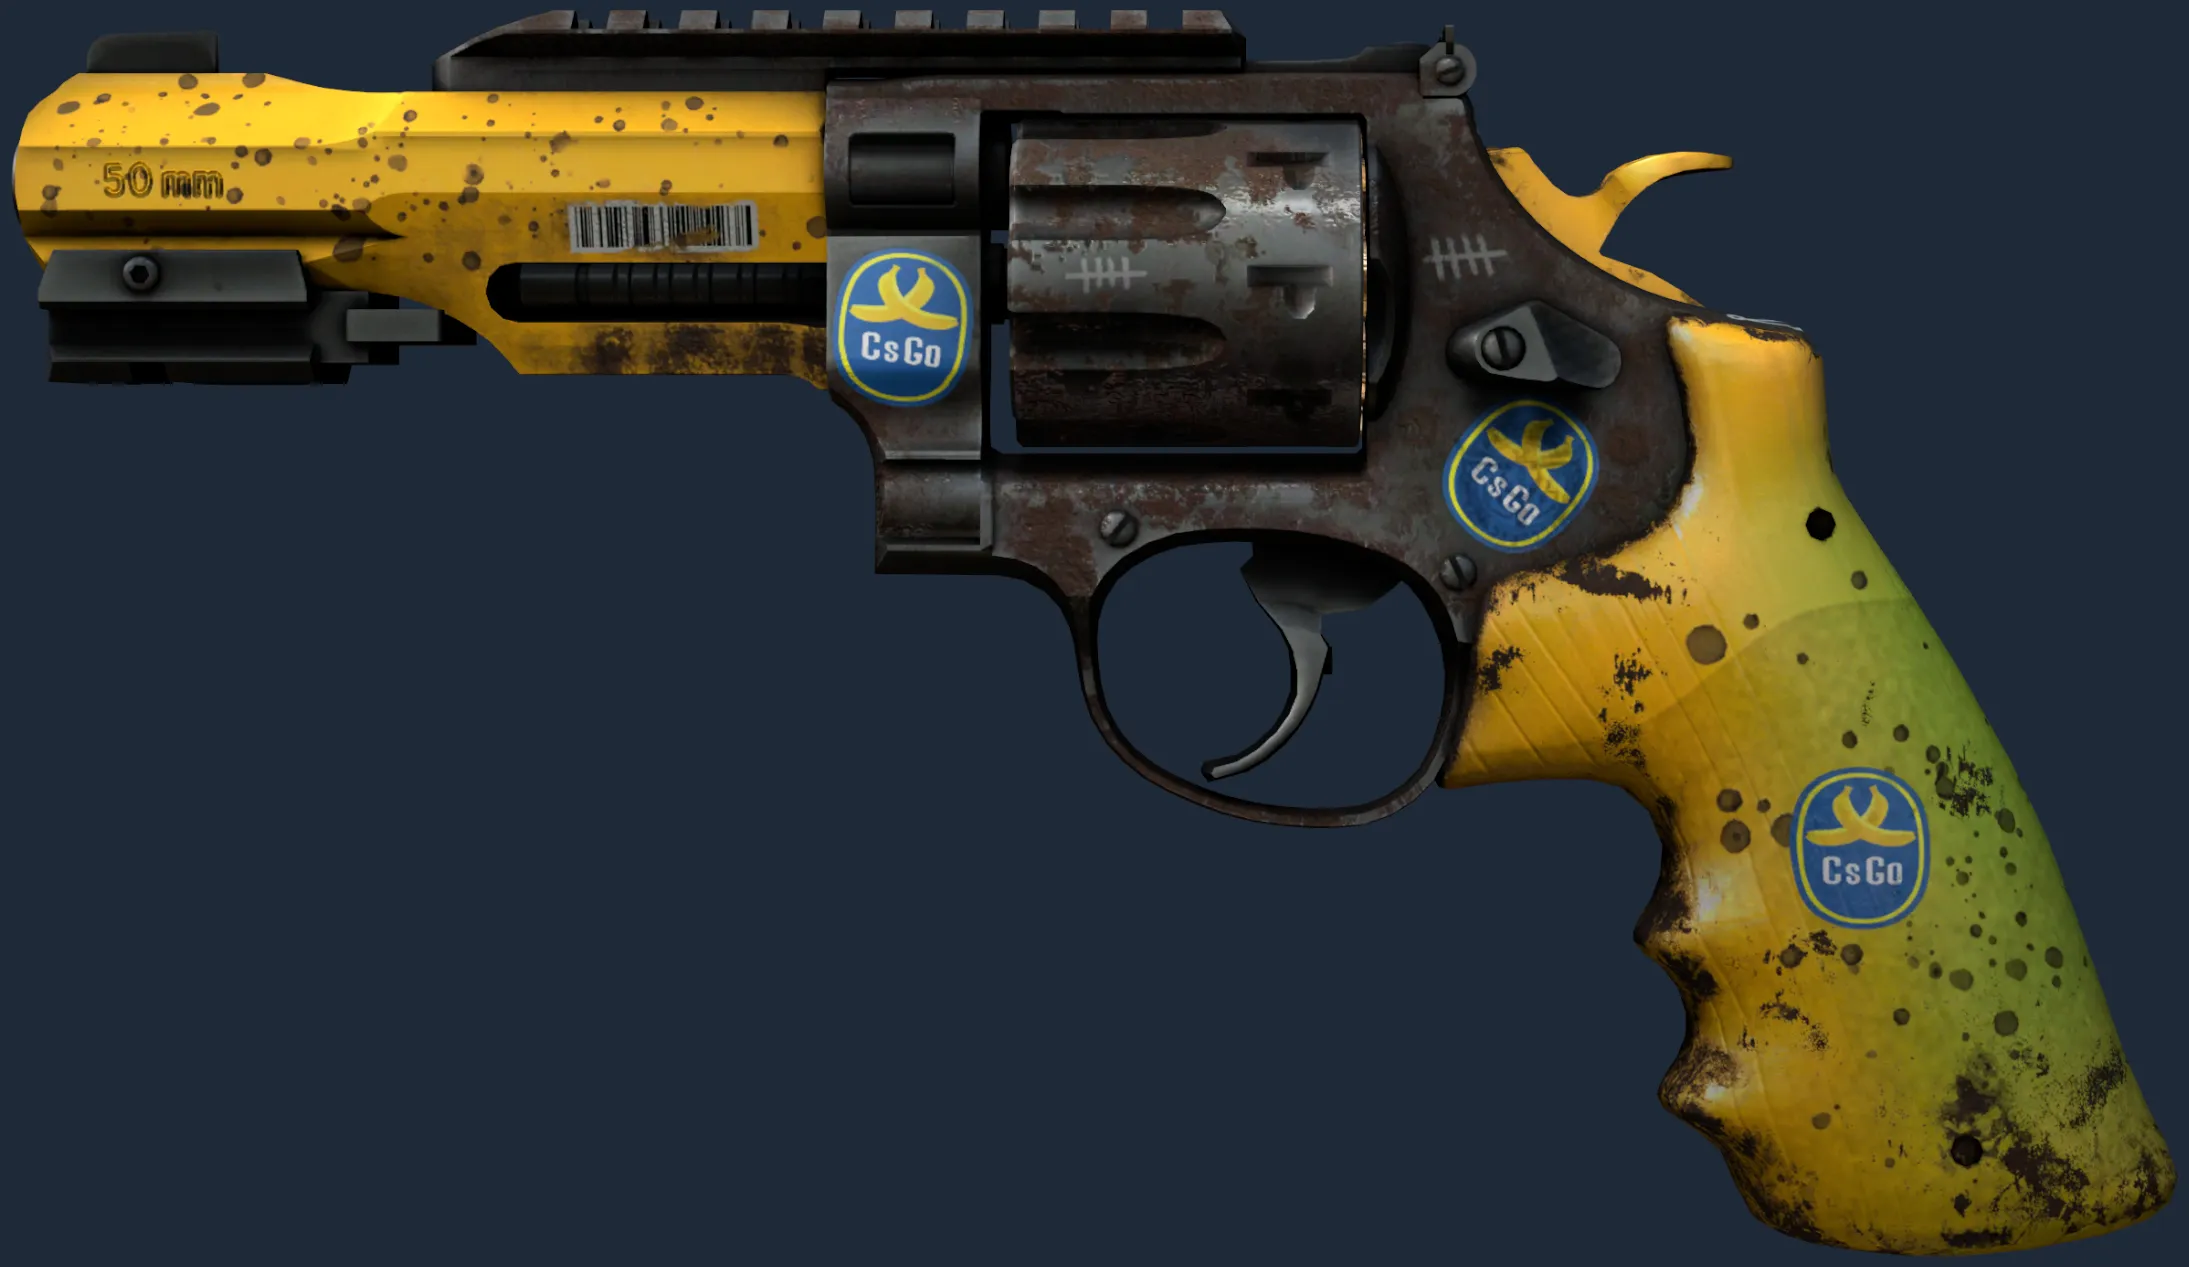 StatTrak R8 Revolver | Banana Cannon (Factory New)